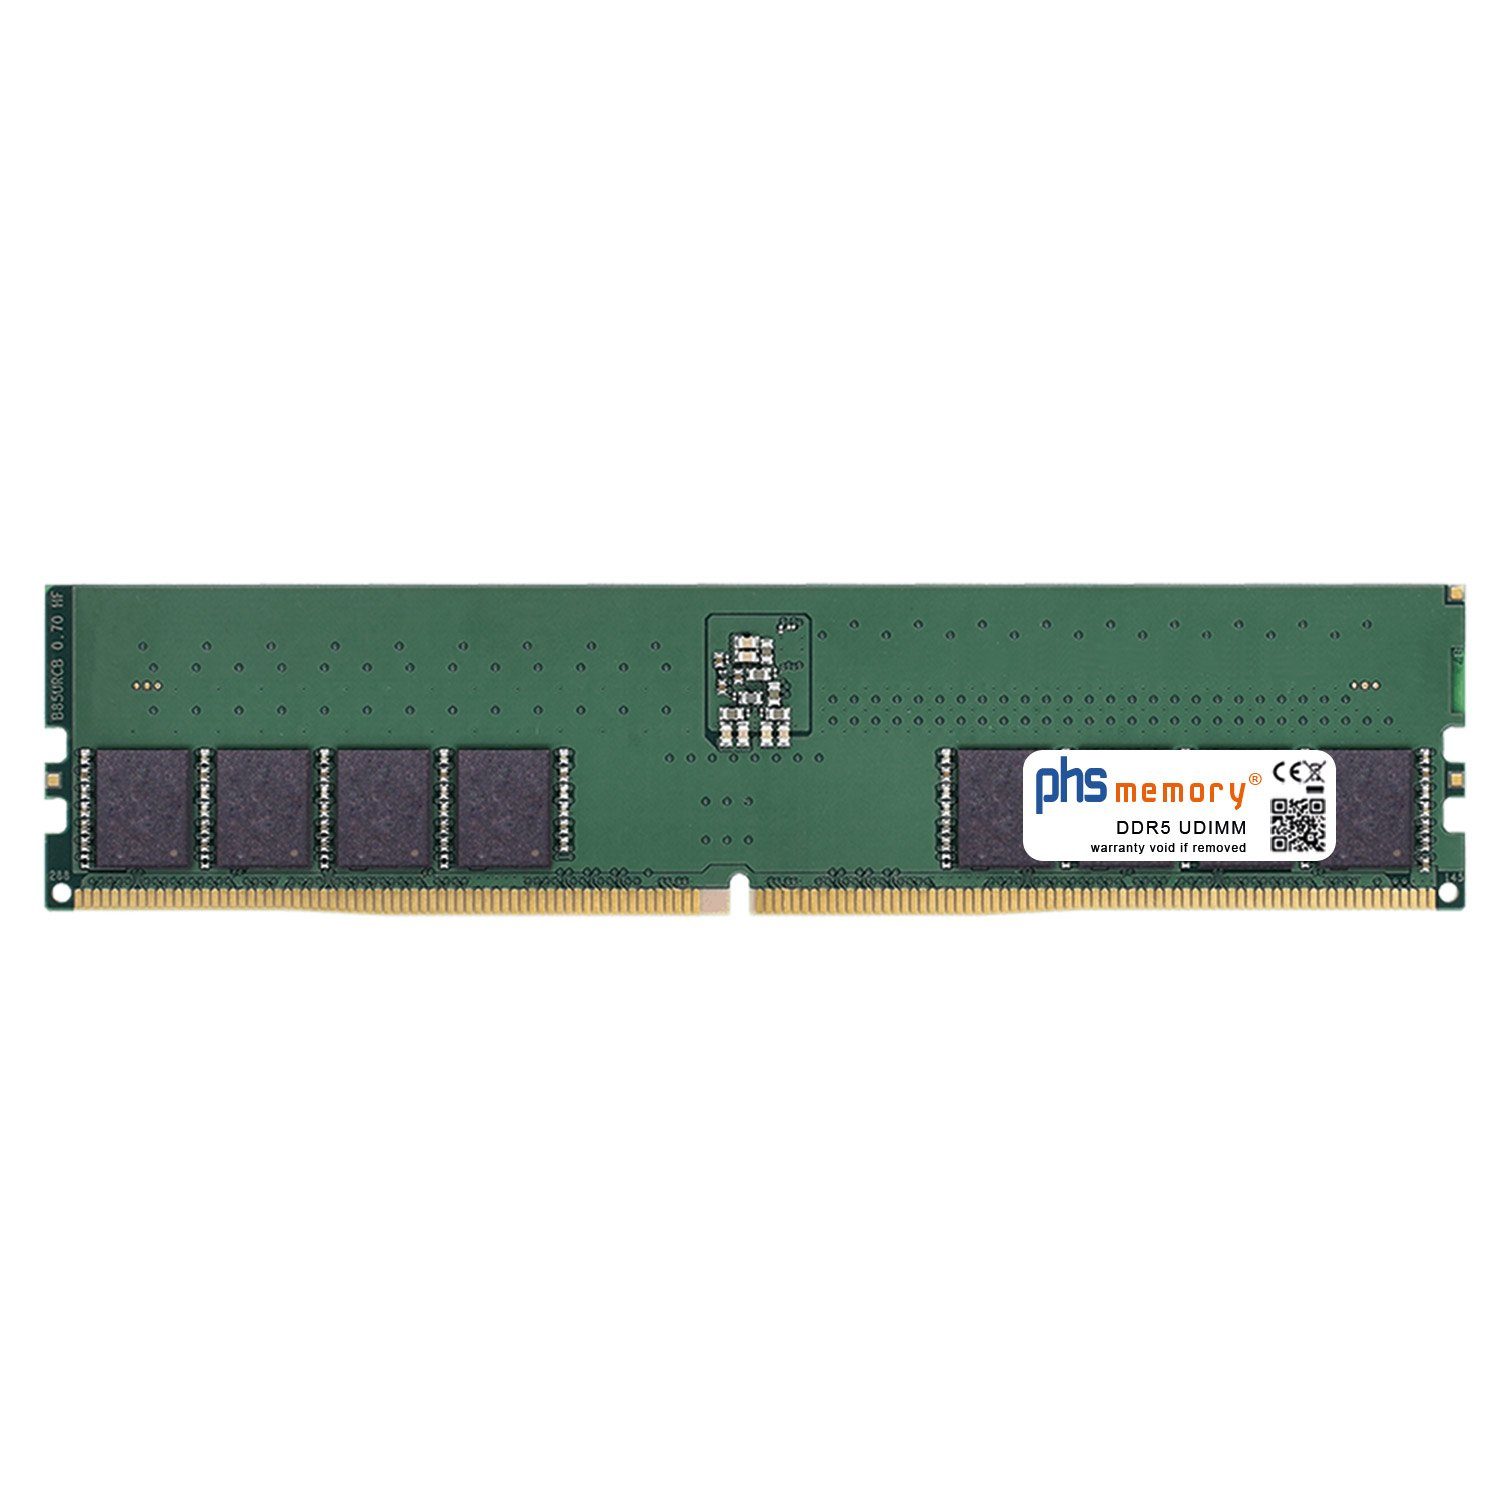 PHS-memory RAM für Captiva Highend Gaming I67-398 Arbeitsspeicher